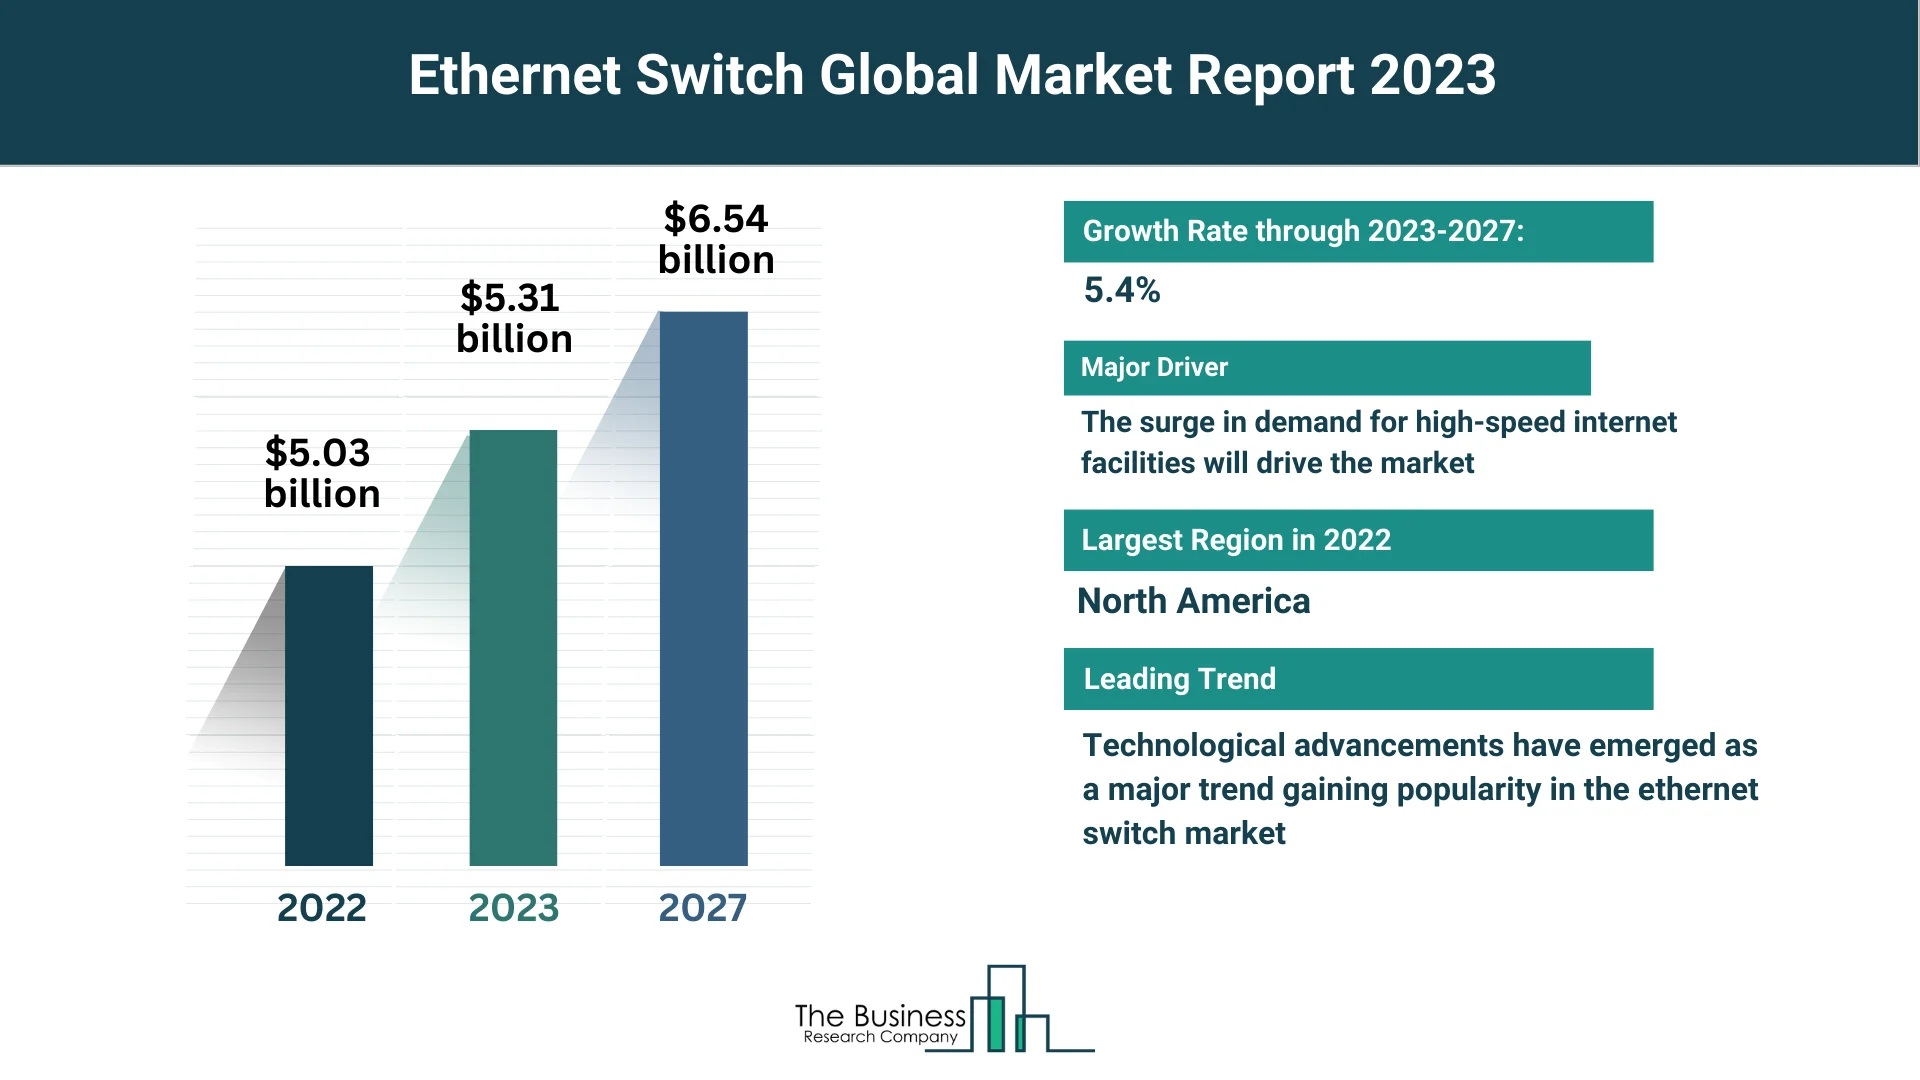 Global Ethernet Switch Market